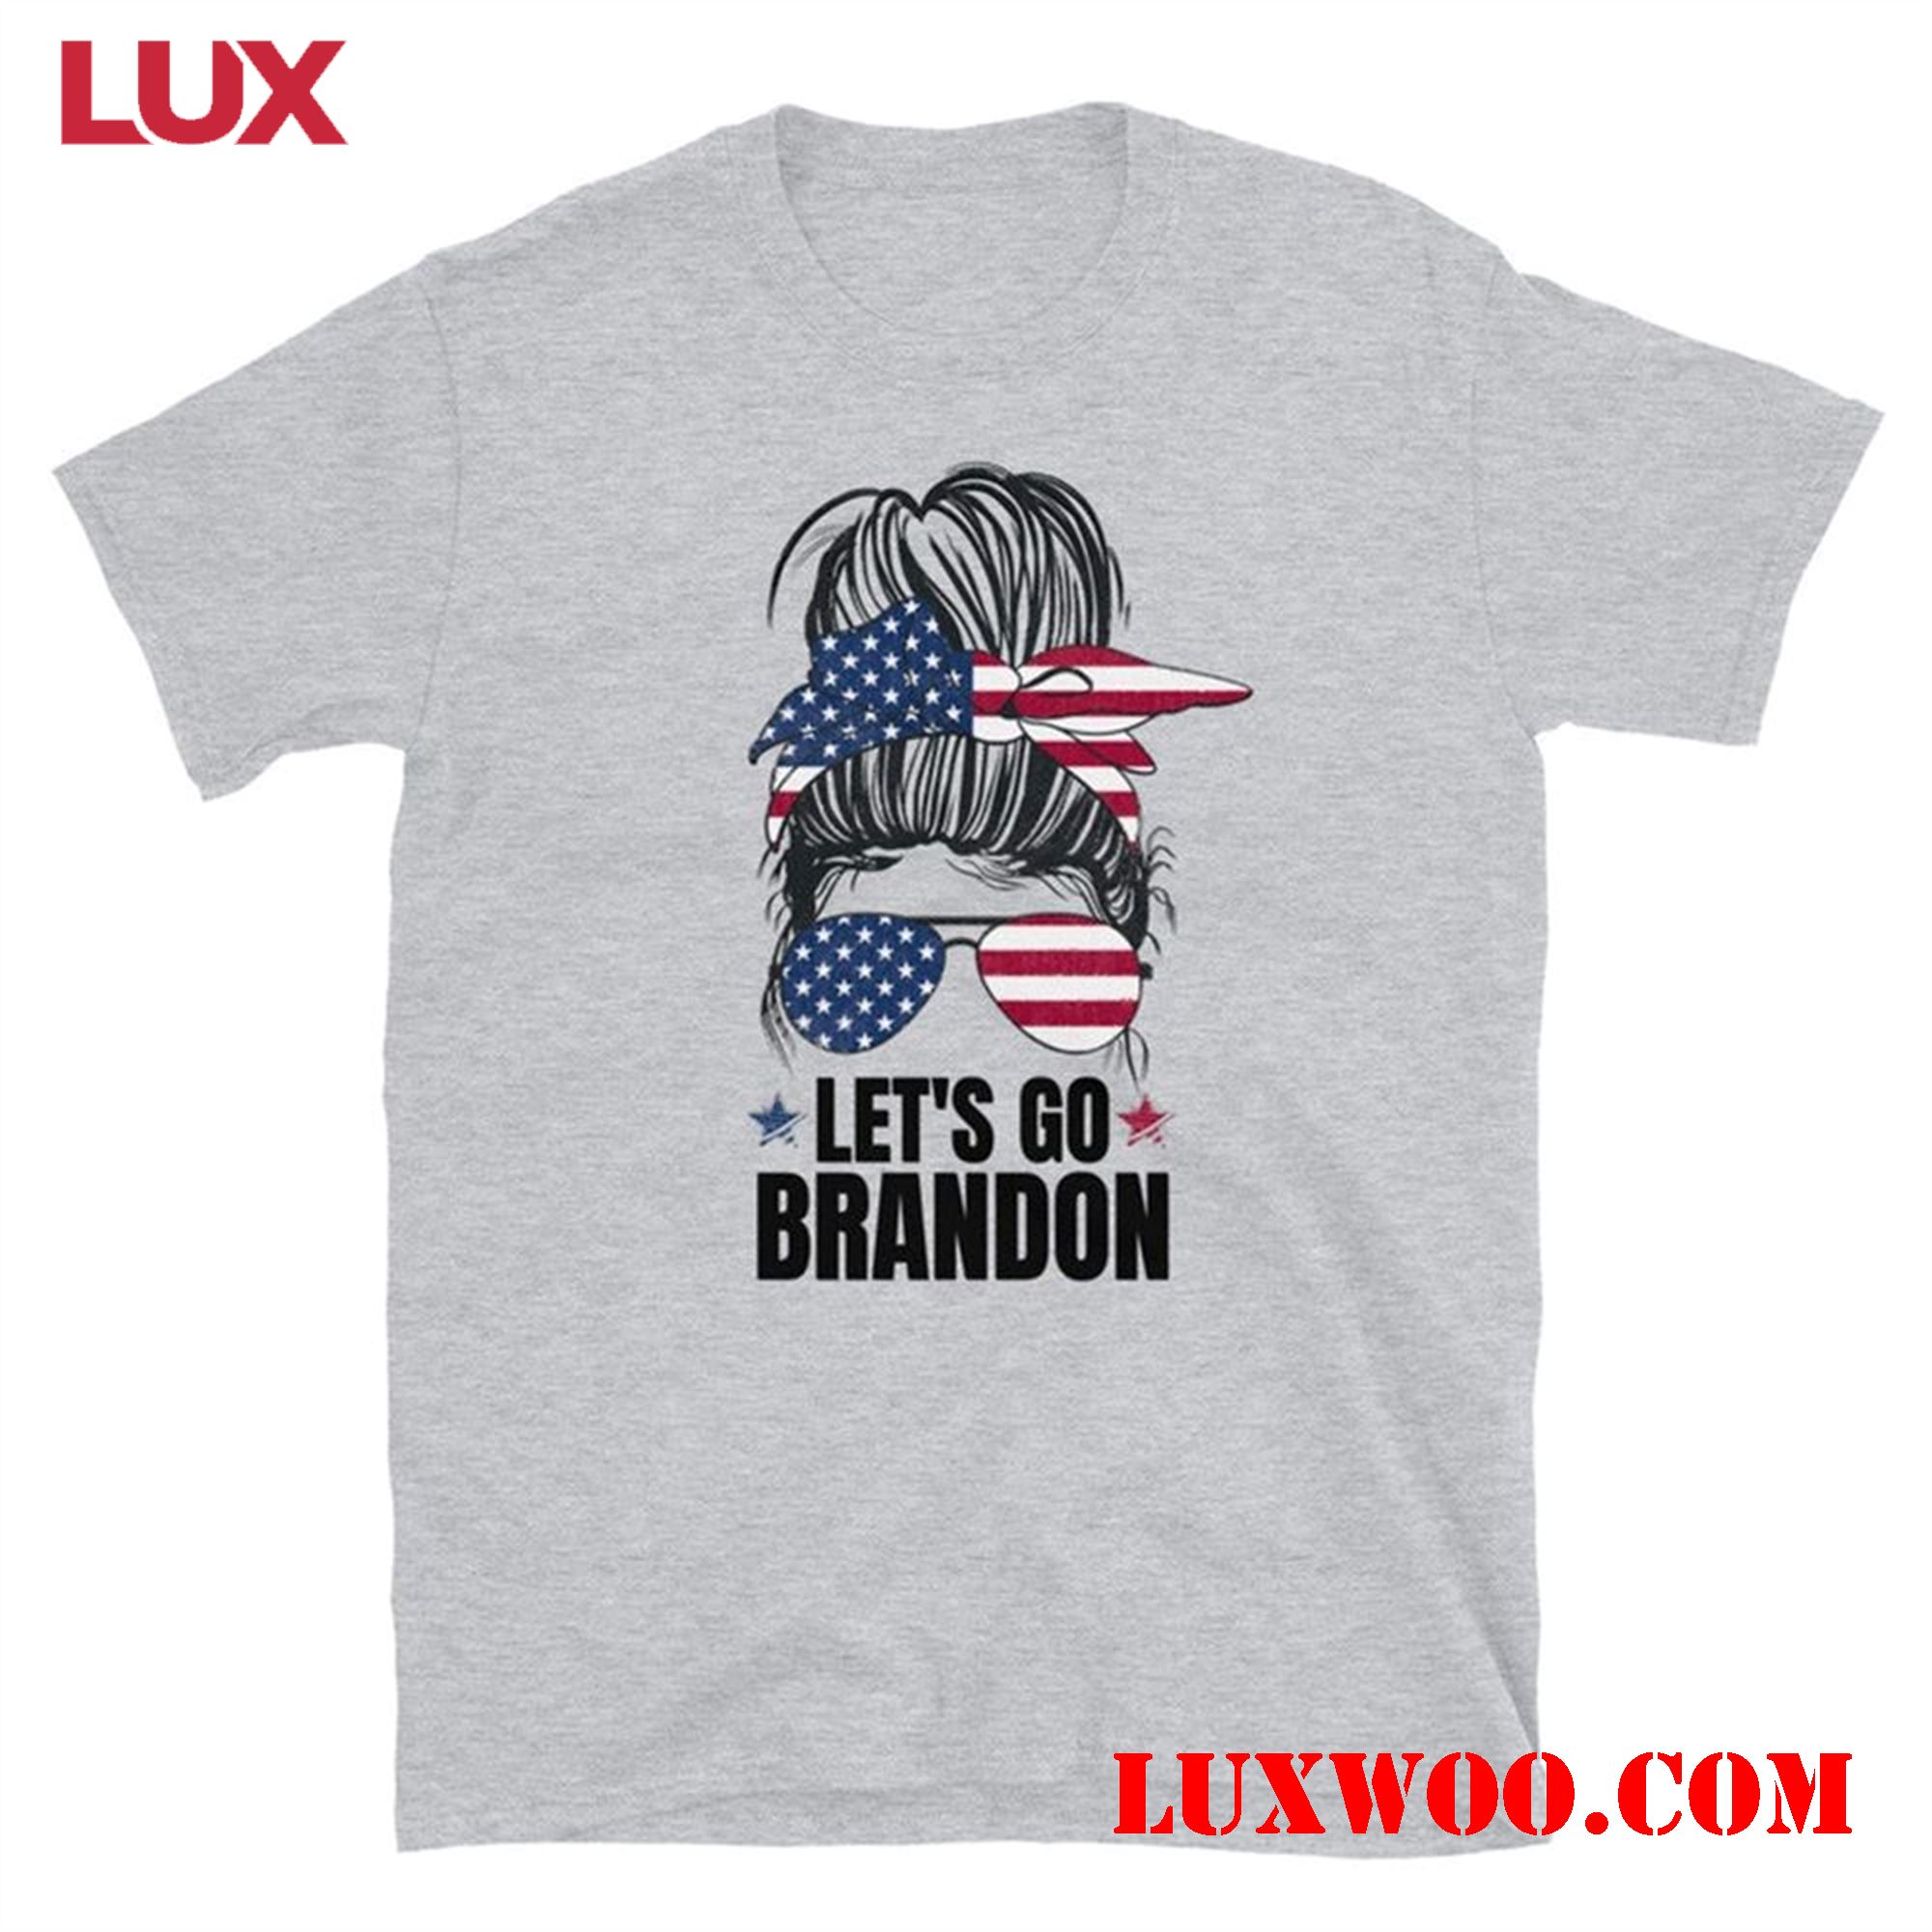 Stylish Women's Let's Go Brandon Shirt With Messy Bun Design